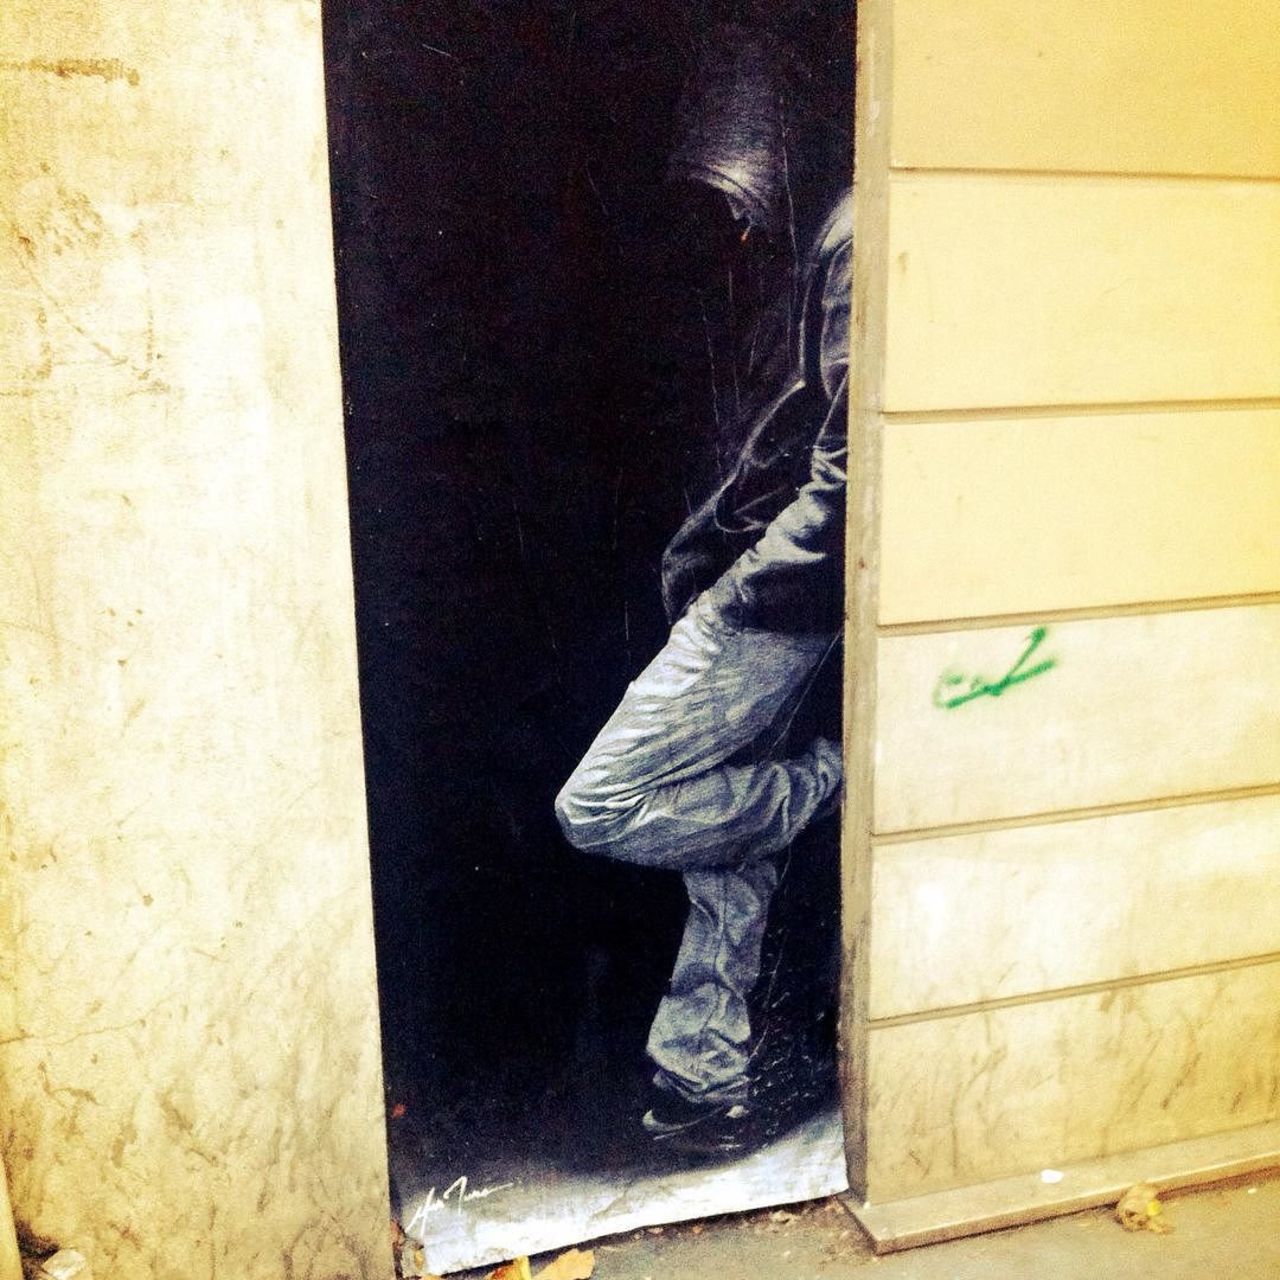 #Paris #graffiti photo by @noamzucker http://ift.tt/1PK3i4S #StreetArt https://t.co/GB6tChBA70